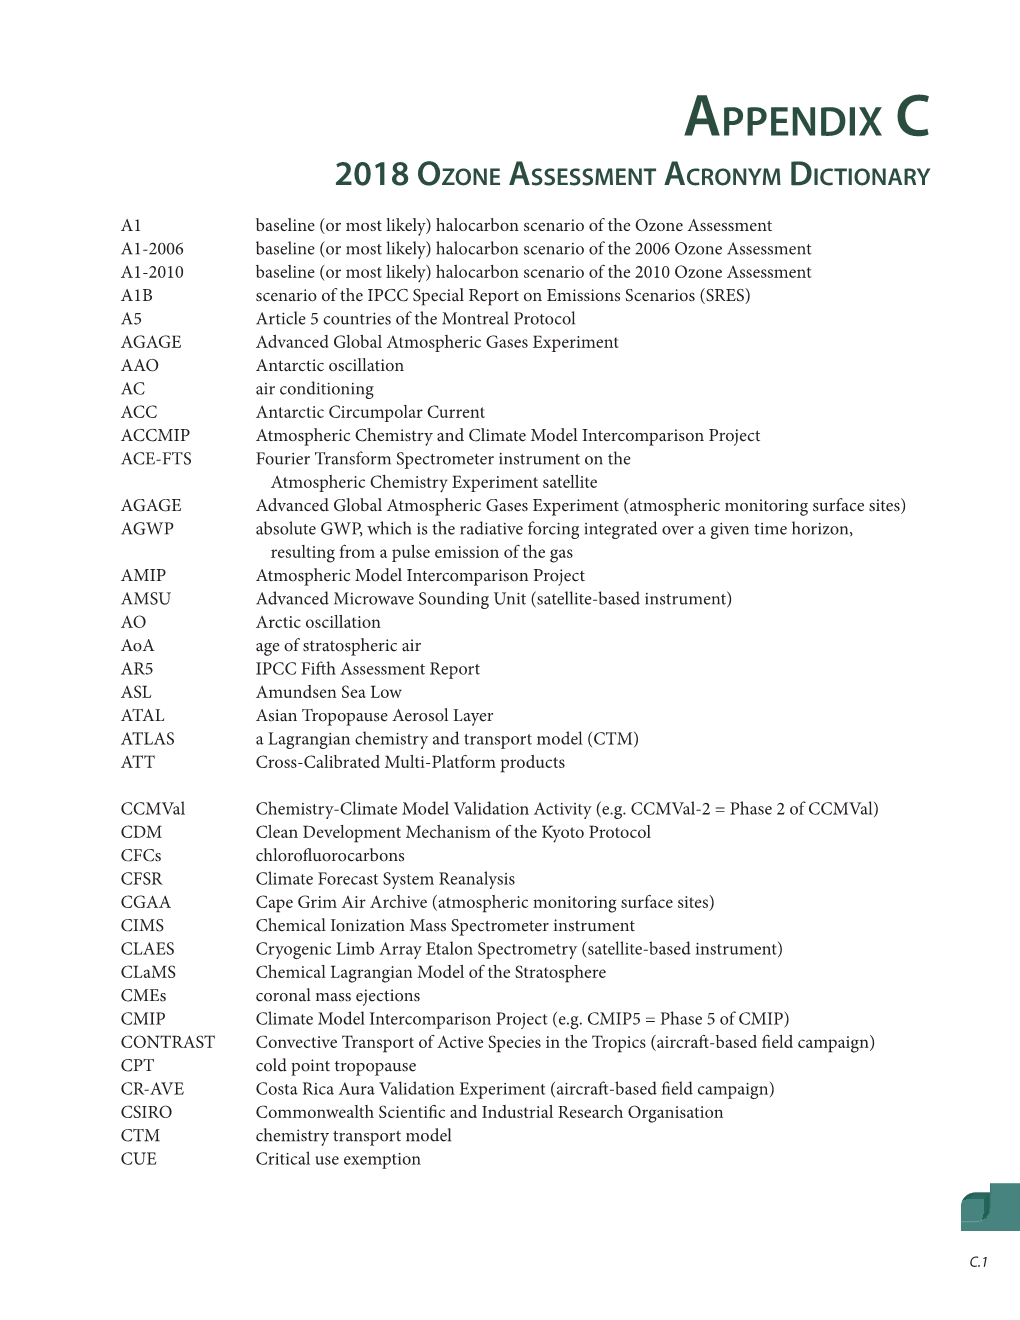 Appendix C 2018 Ozone Assessment Acronym Dictionary